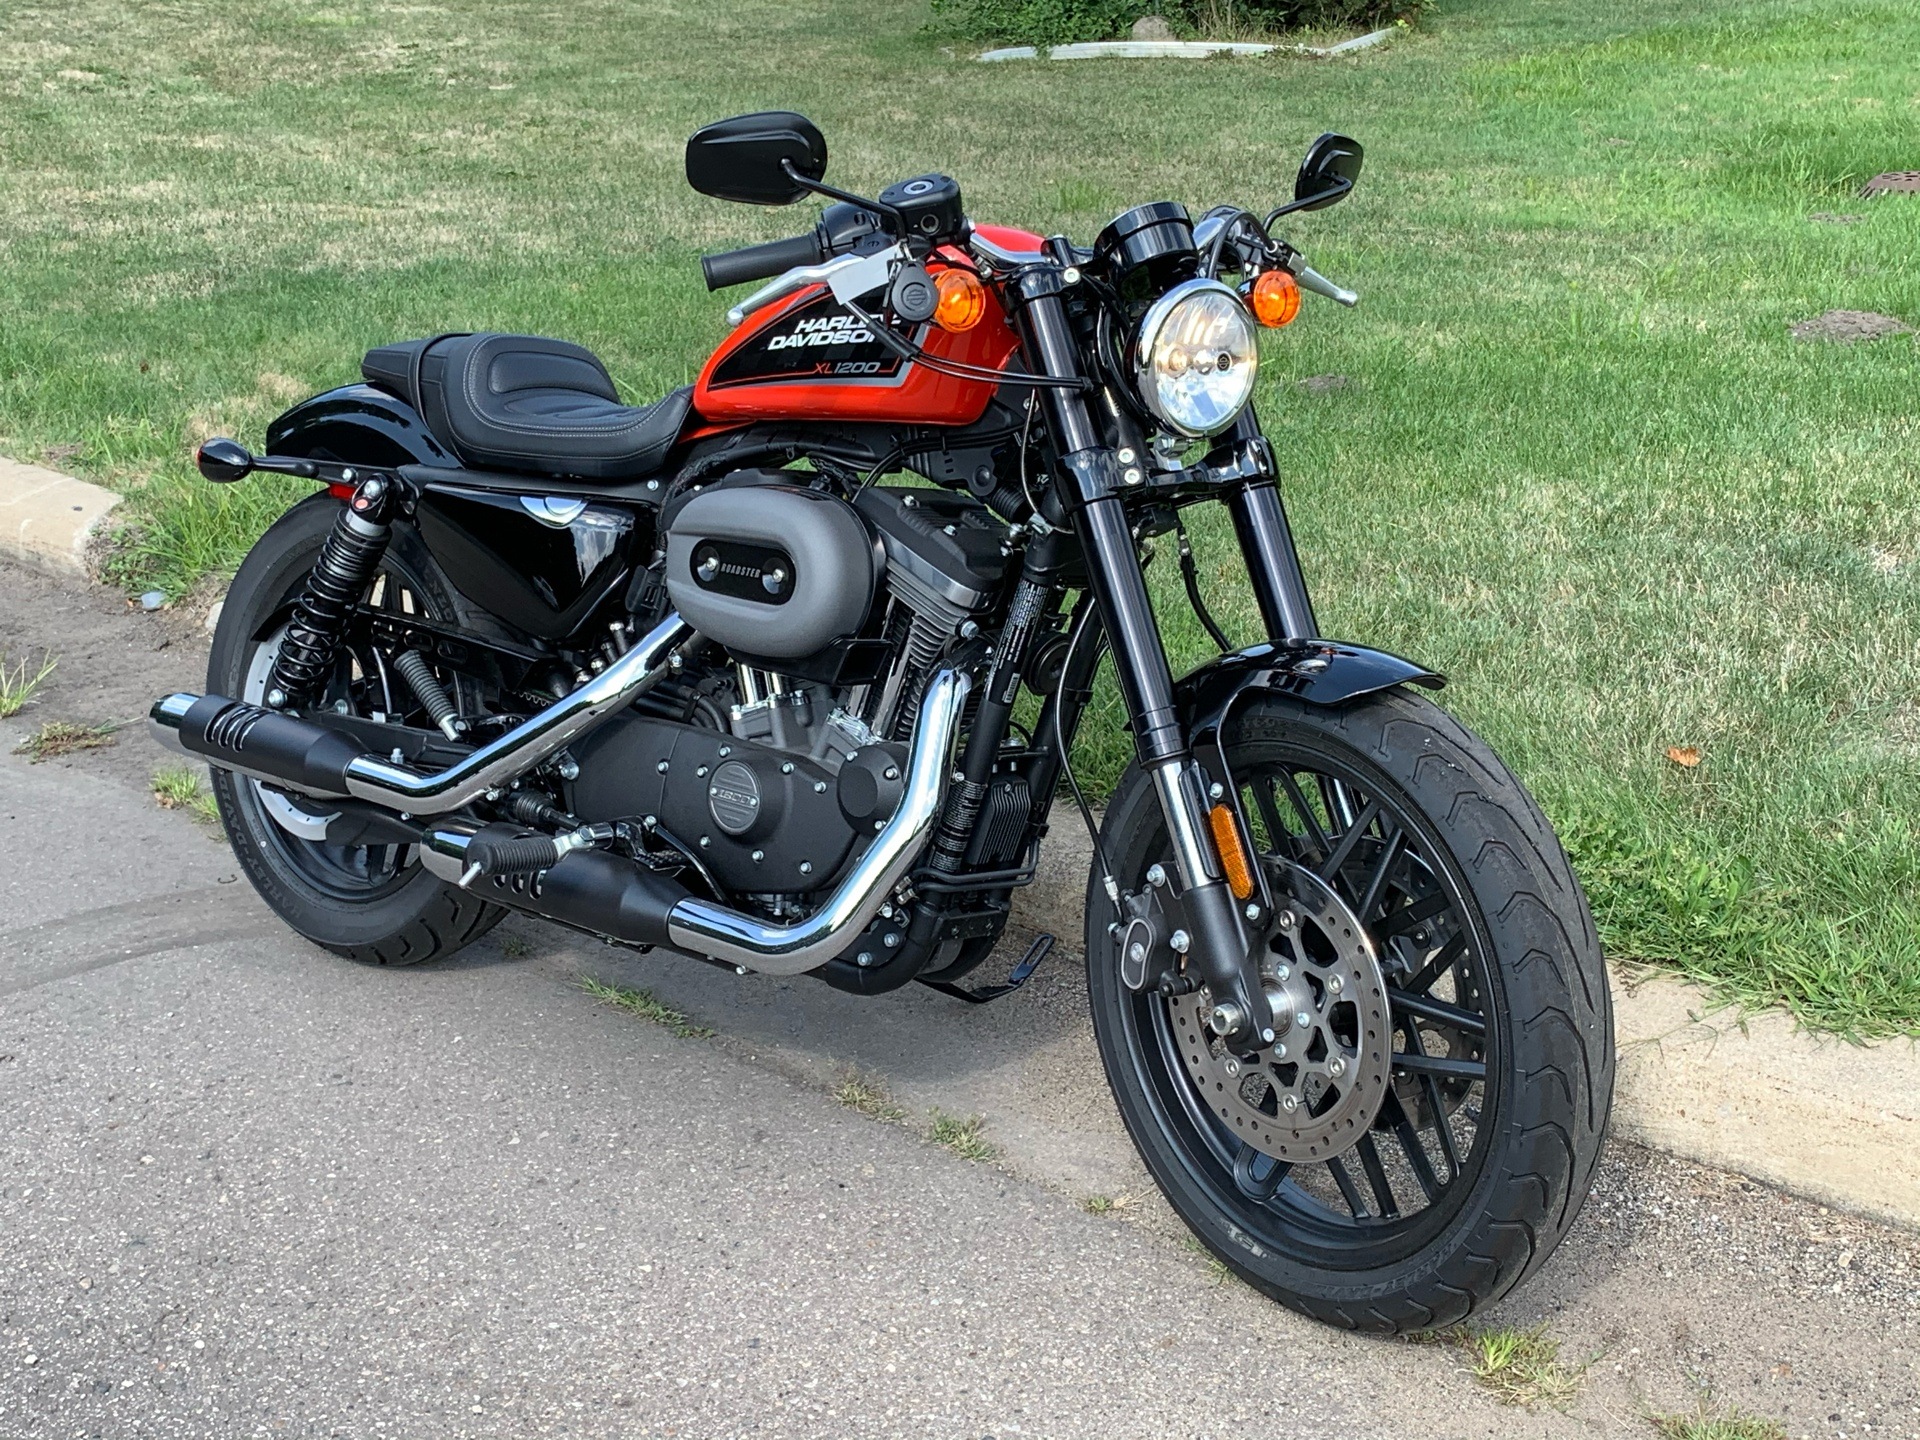 New 2020 Harley Davidson Roadster Motorcycles In Portage Mi 410116 Performance Orange